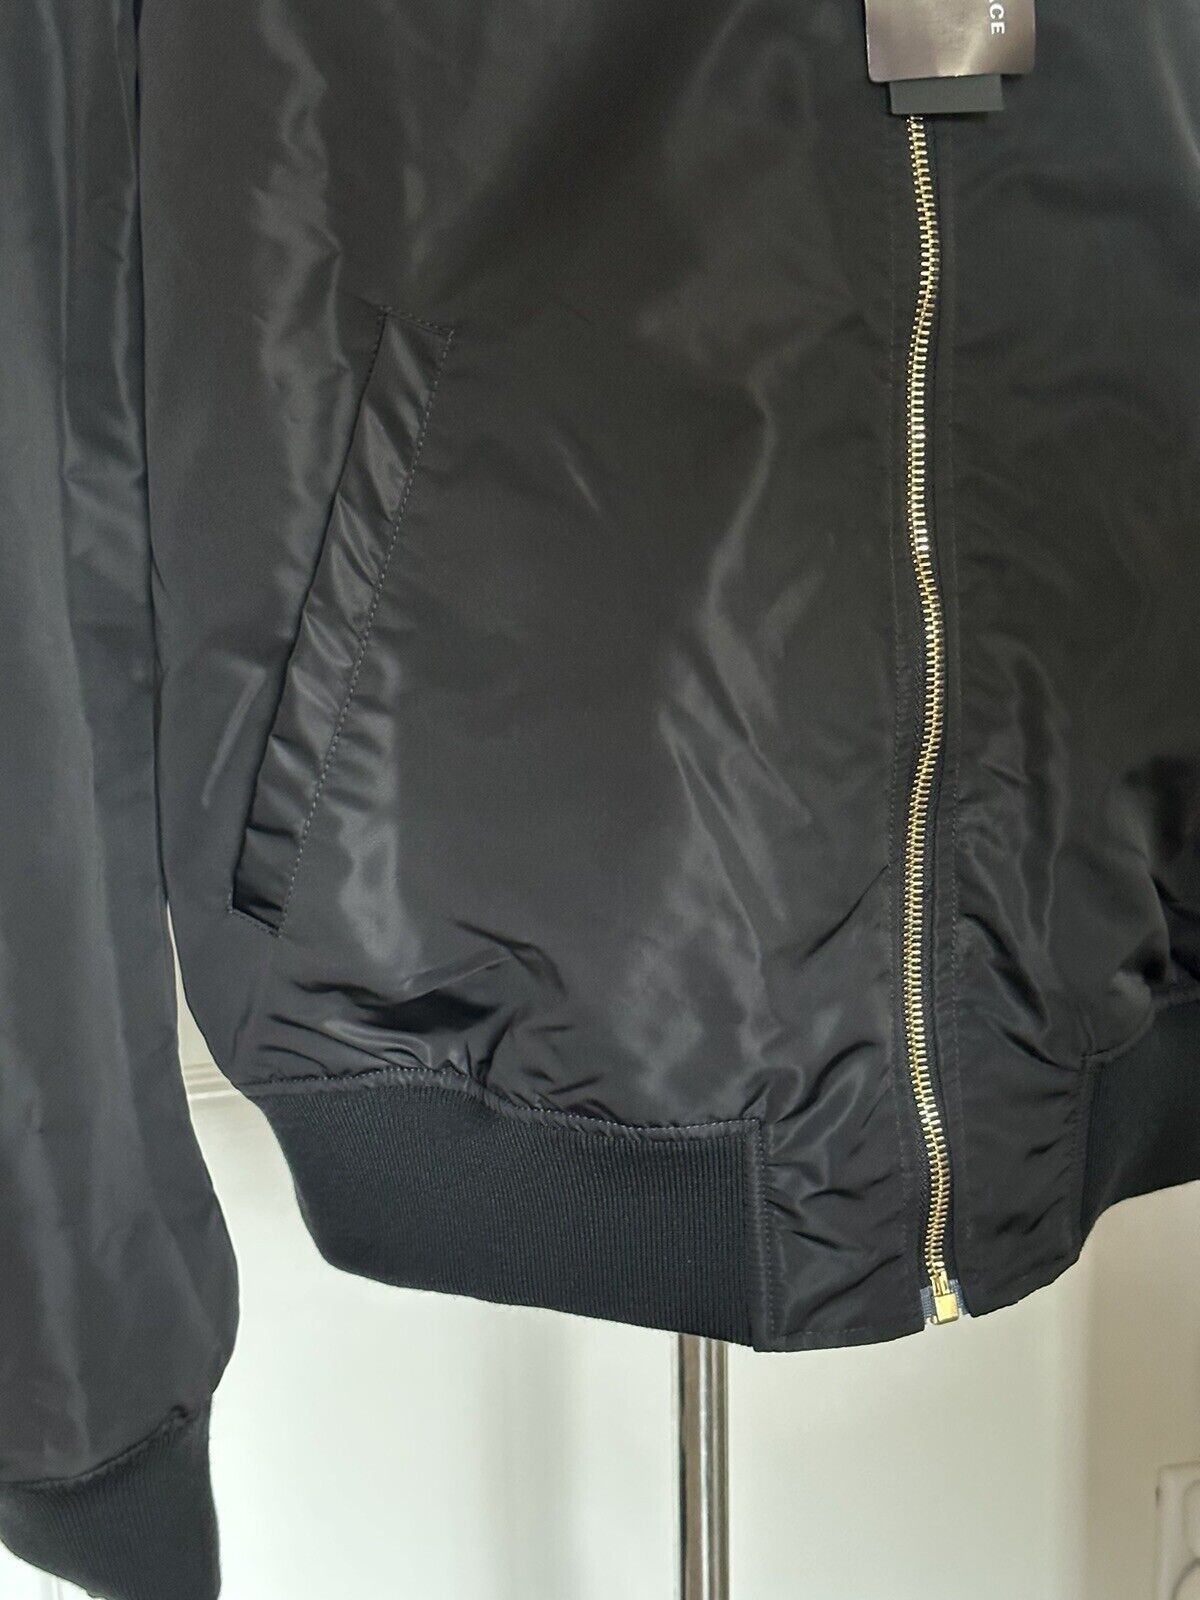 NWT Versace Mens Blousons Baroque Reversible Jacket Military Green 56 A89511S